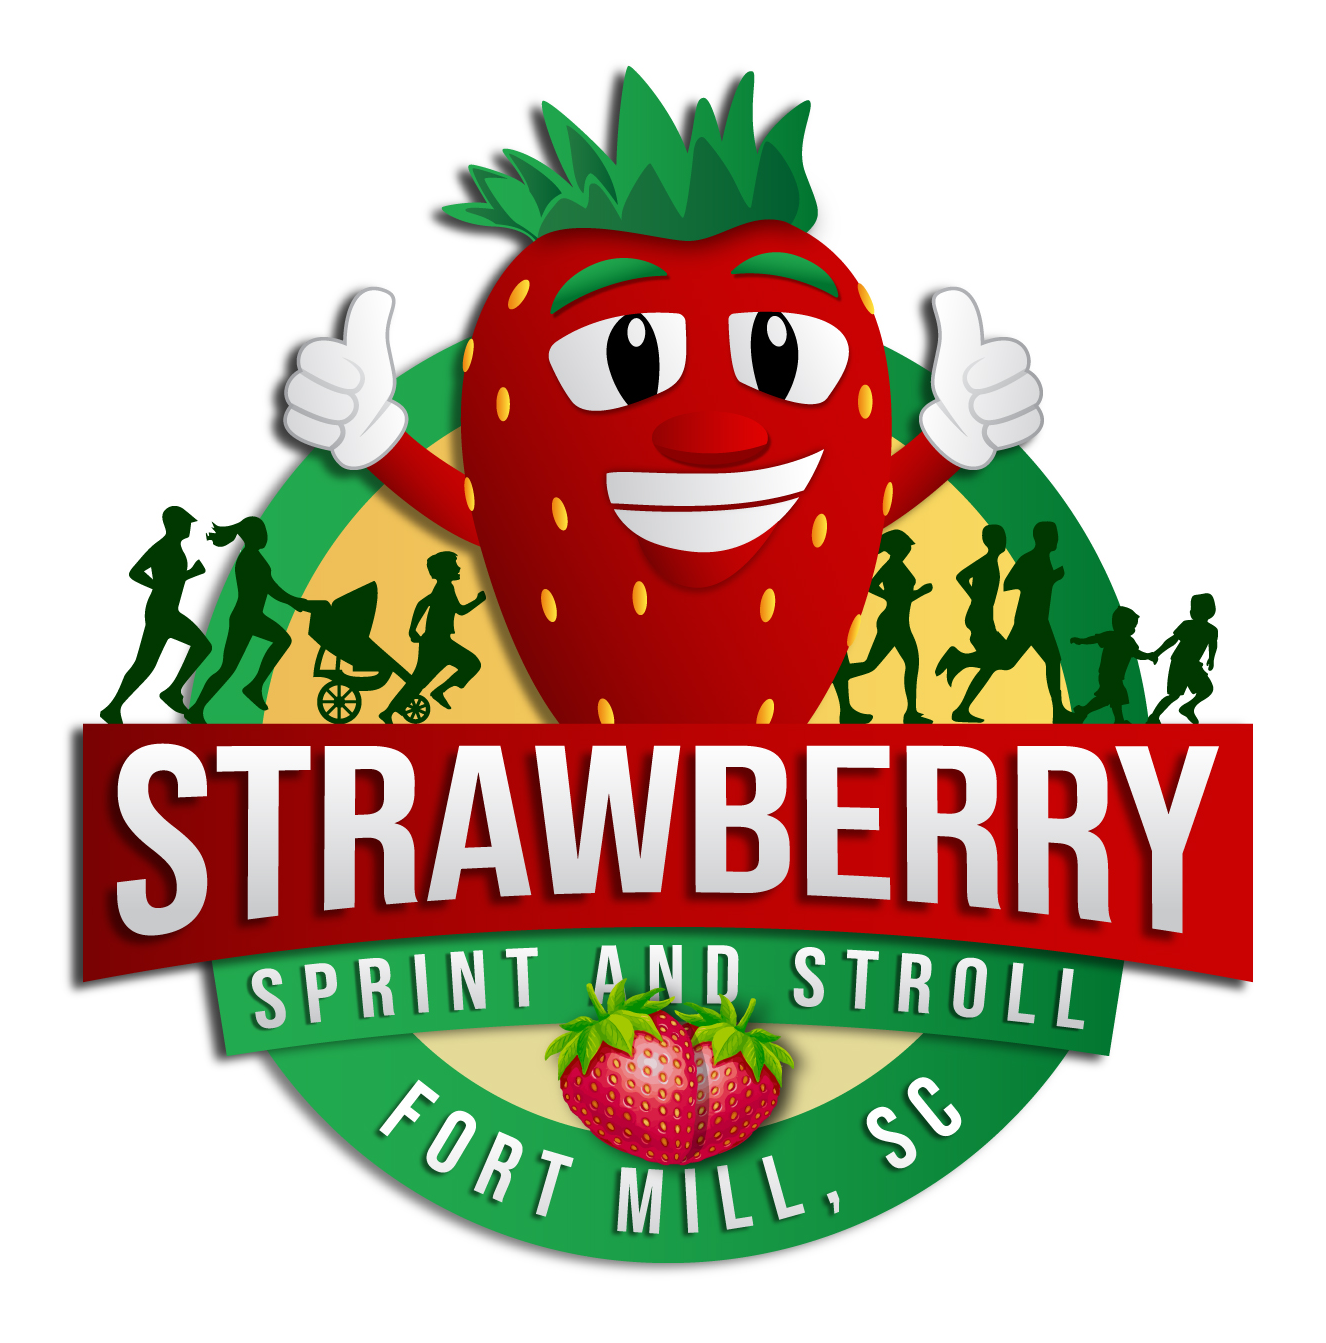 Strawberry Sprint & Stroll logo